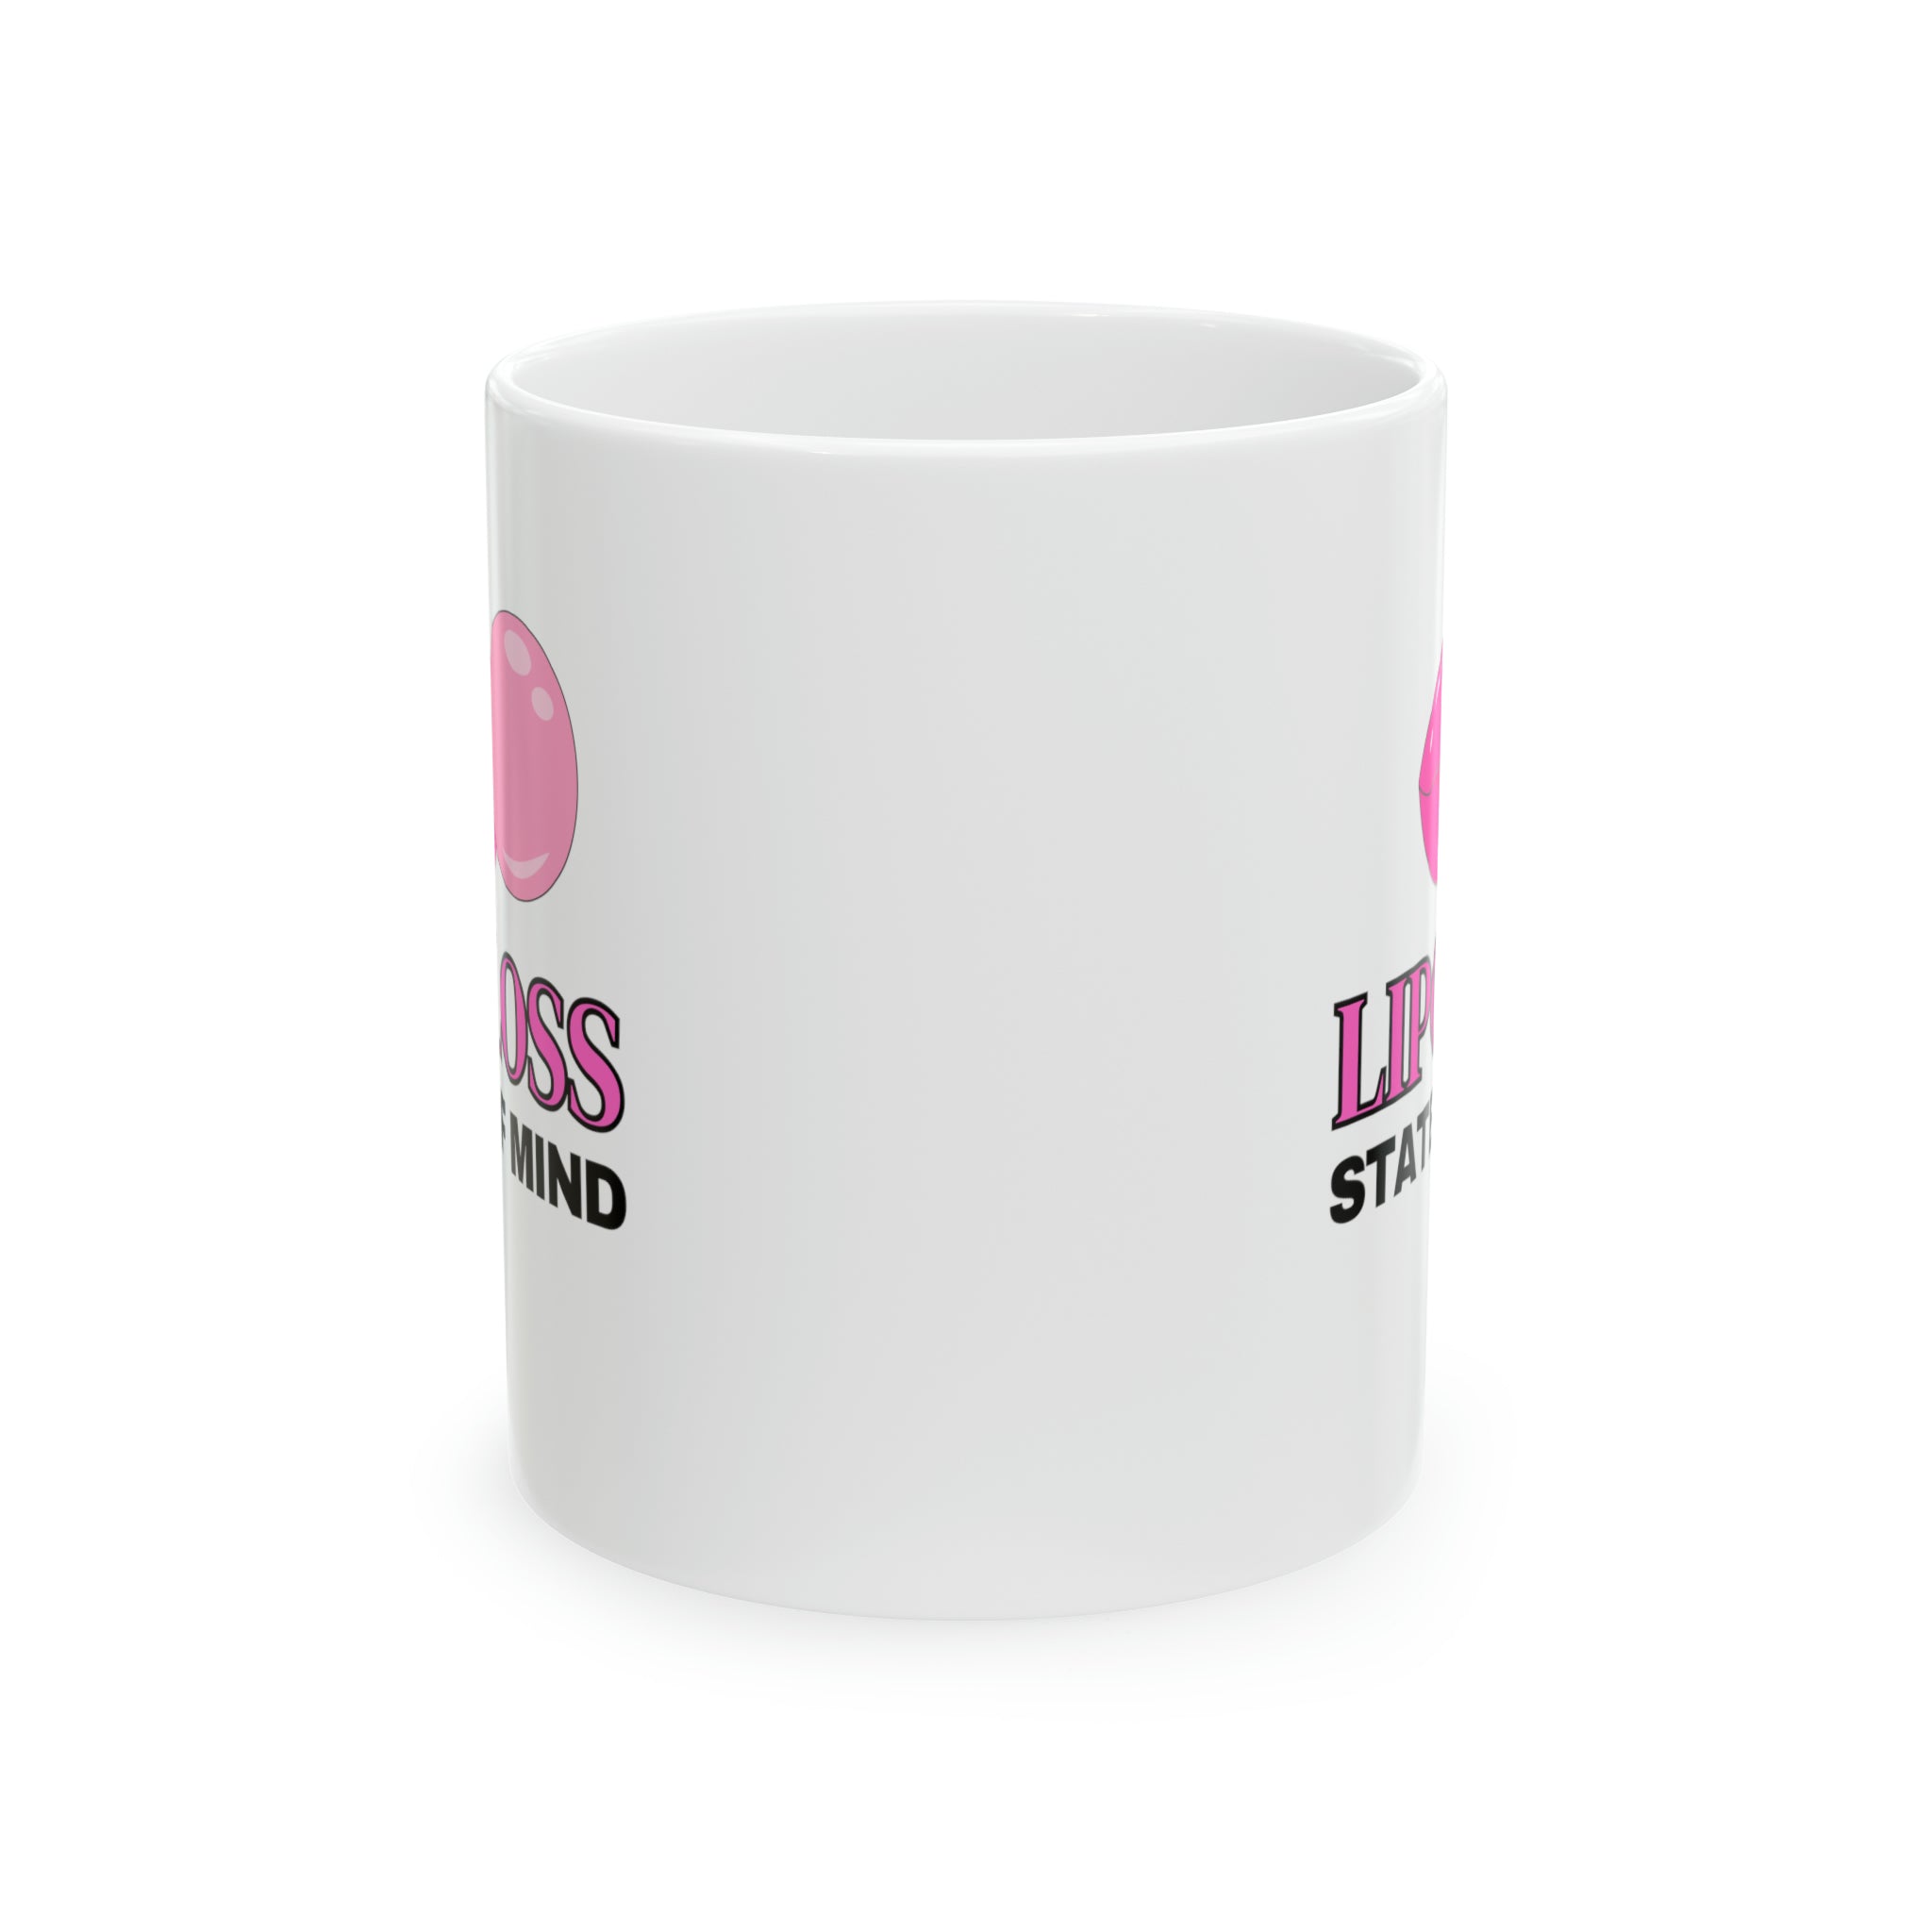 Lipgloss State of Mind (Pink Bubblegum) 11oz Coffee Mug, Makeup Themed Coffee Mug, Beauty Business Mug Mug  The Middle Aged Groove